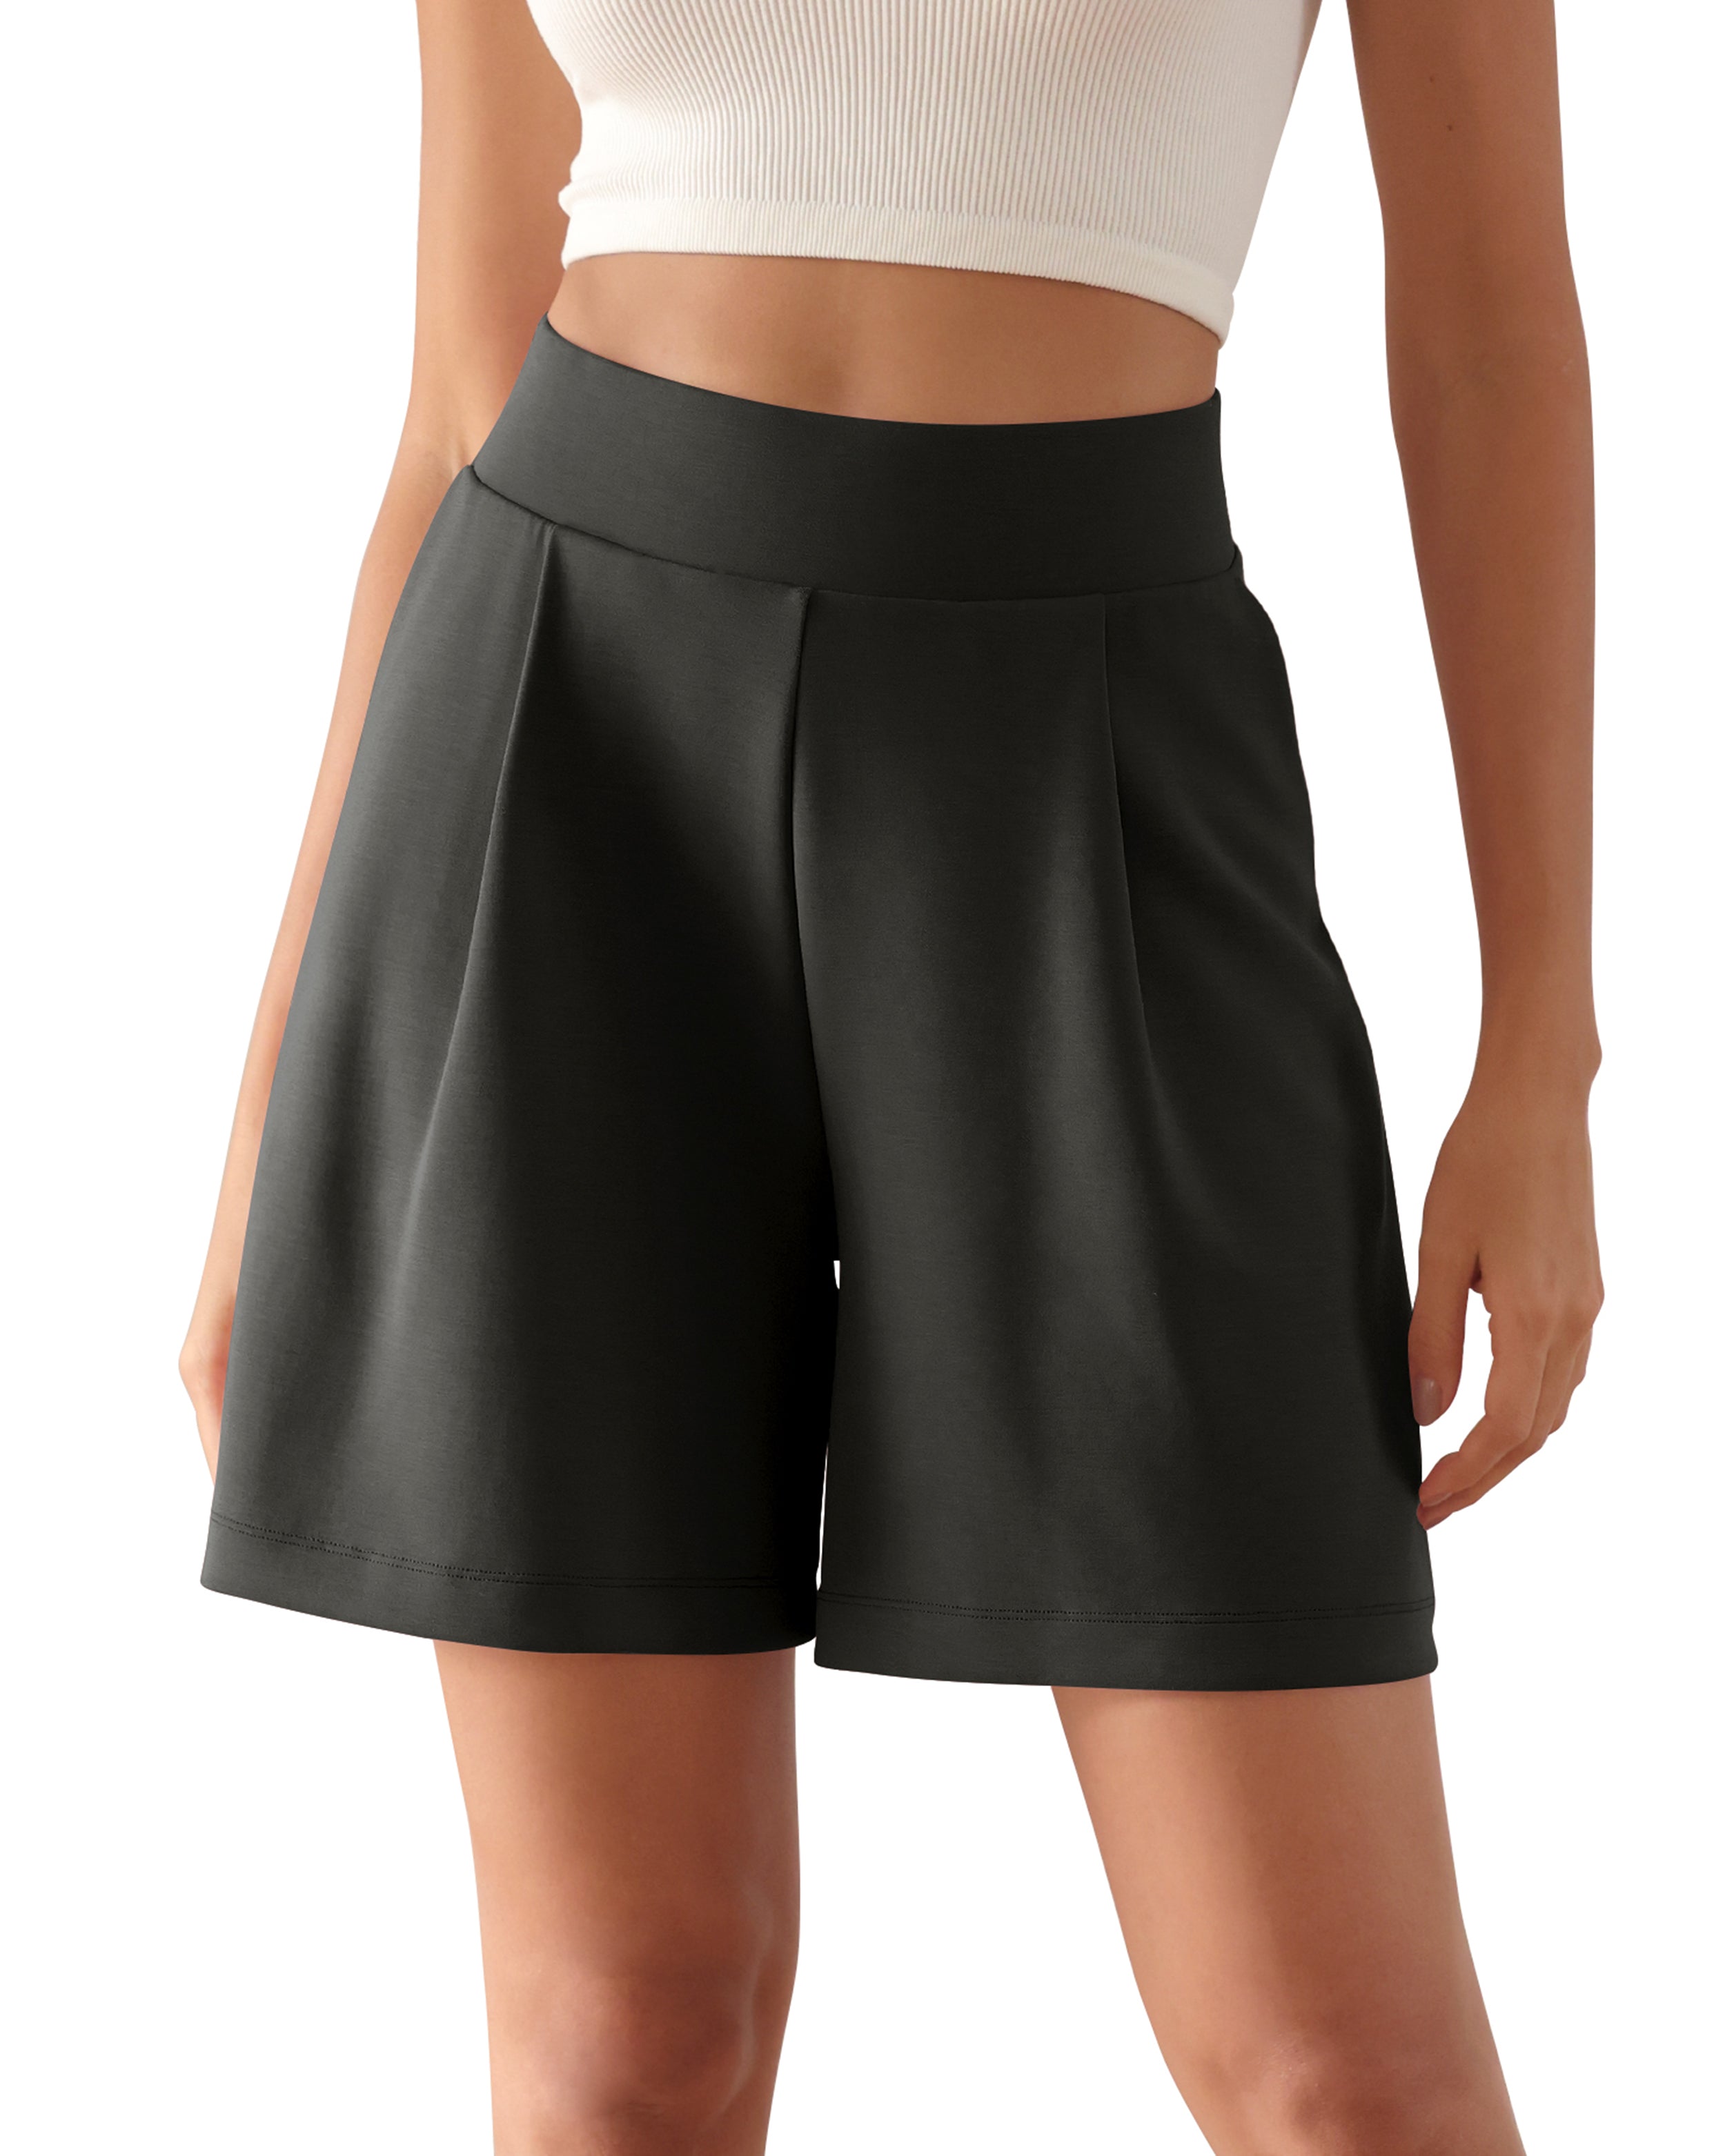 Modal Soft High Waist Wide Leg Shorts with Pockets Black 6 inch - ododos